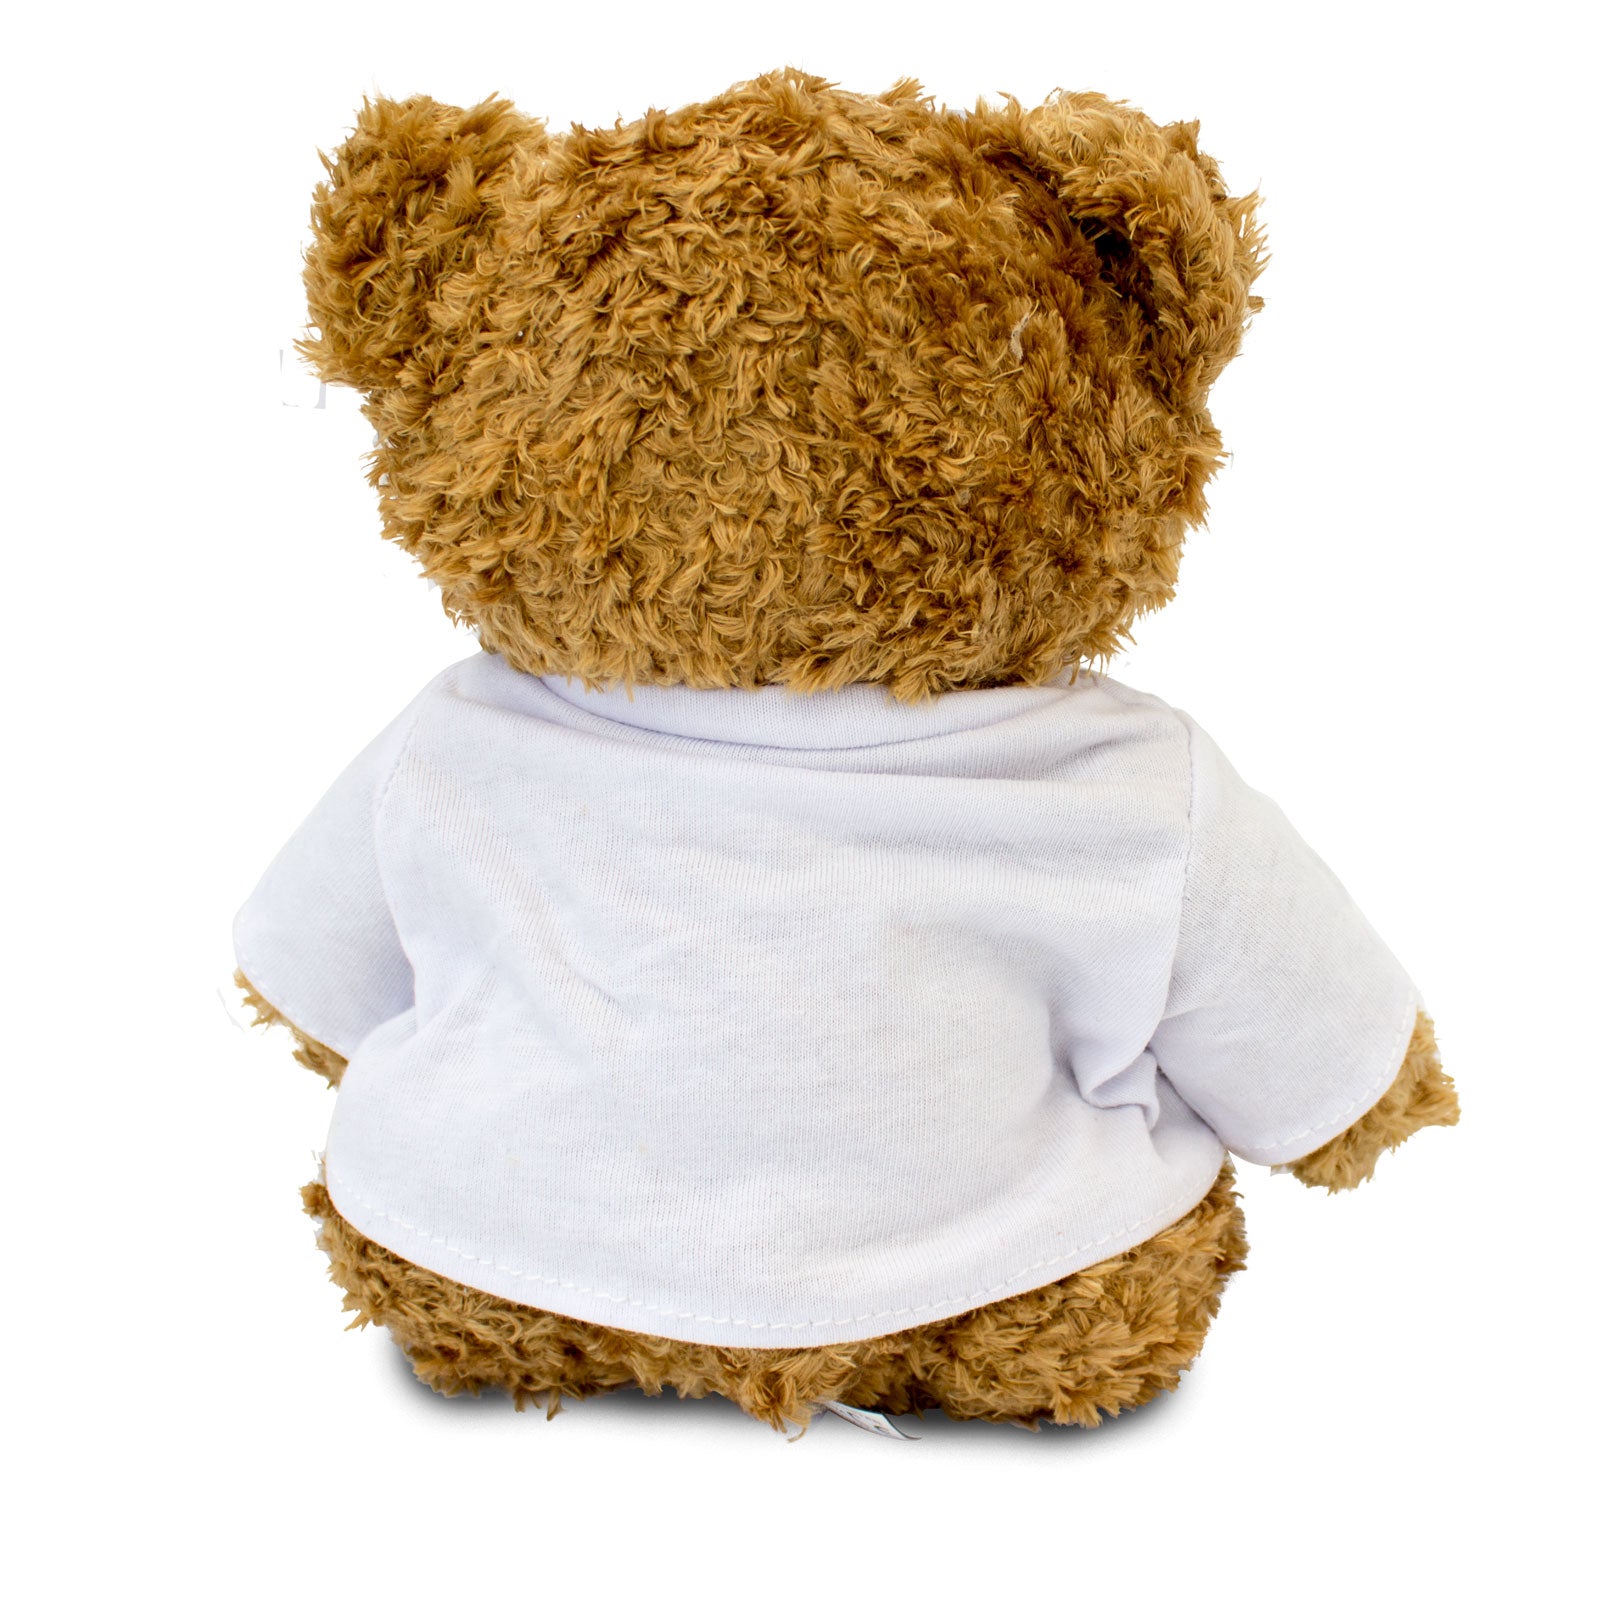 Get Well Soon Ivy - Teddy Bear